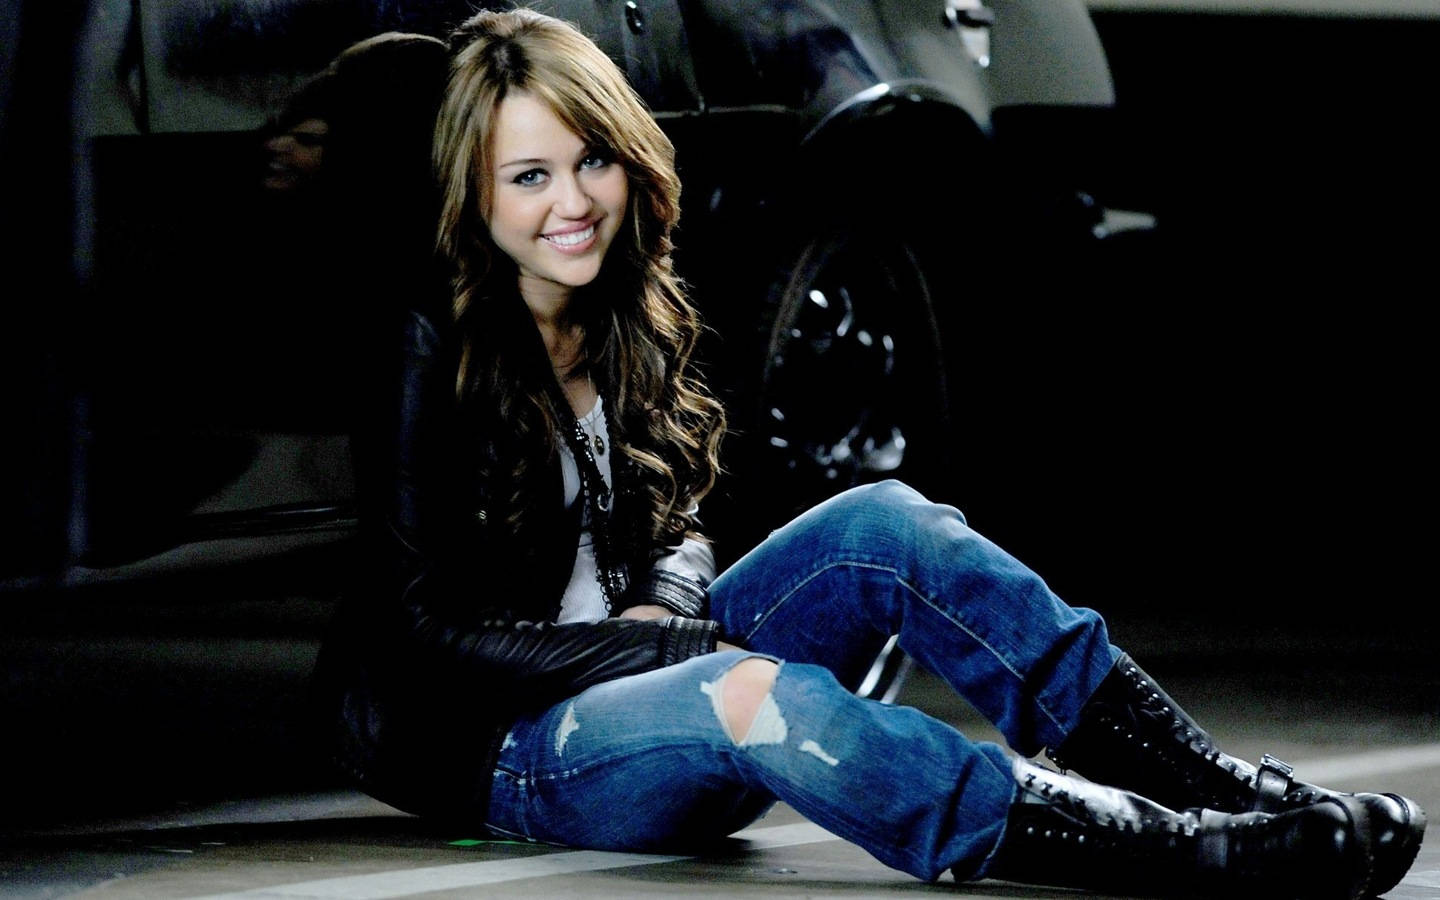 Miley Cyrus Smiling Brightly